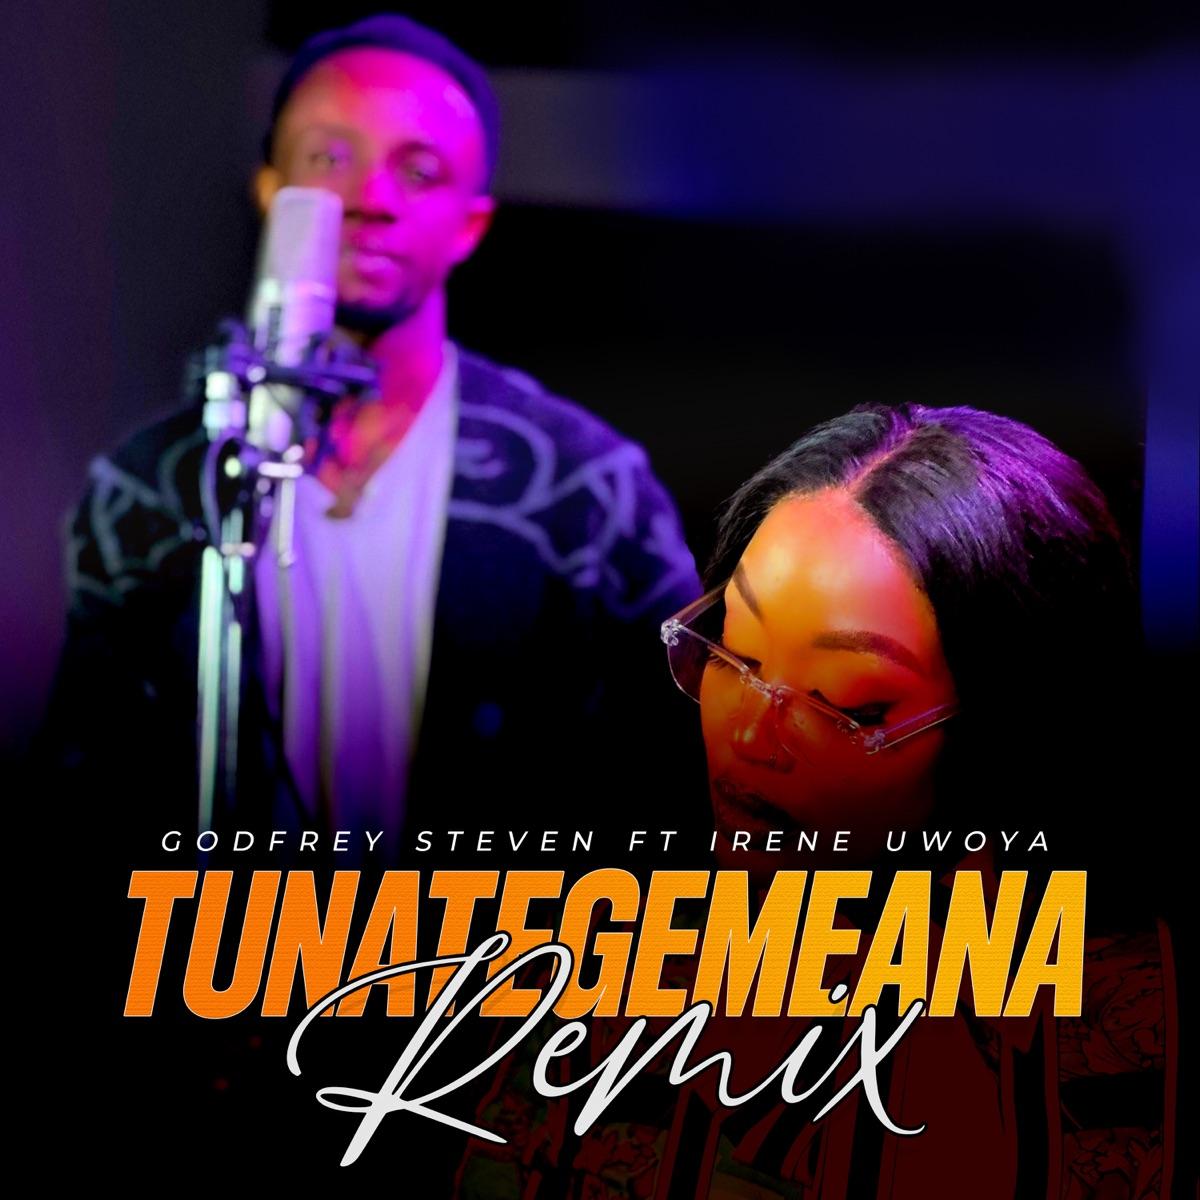 Tunategemea (Remix) By Godfrey Steven Ft Irene Uwoya